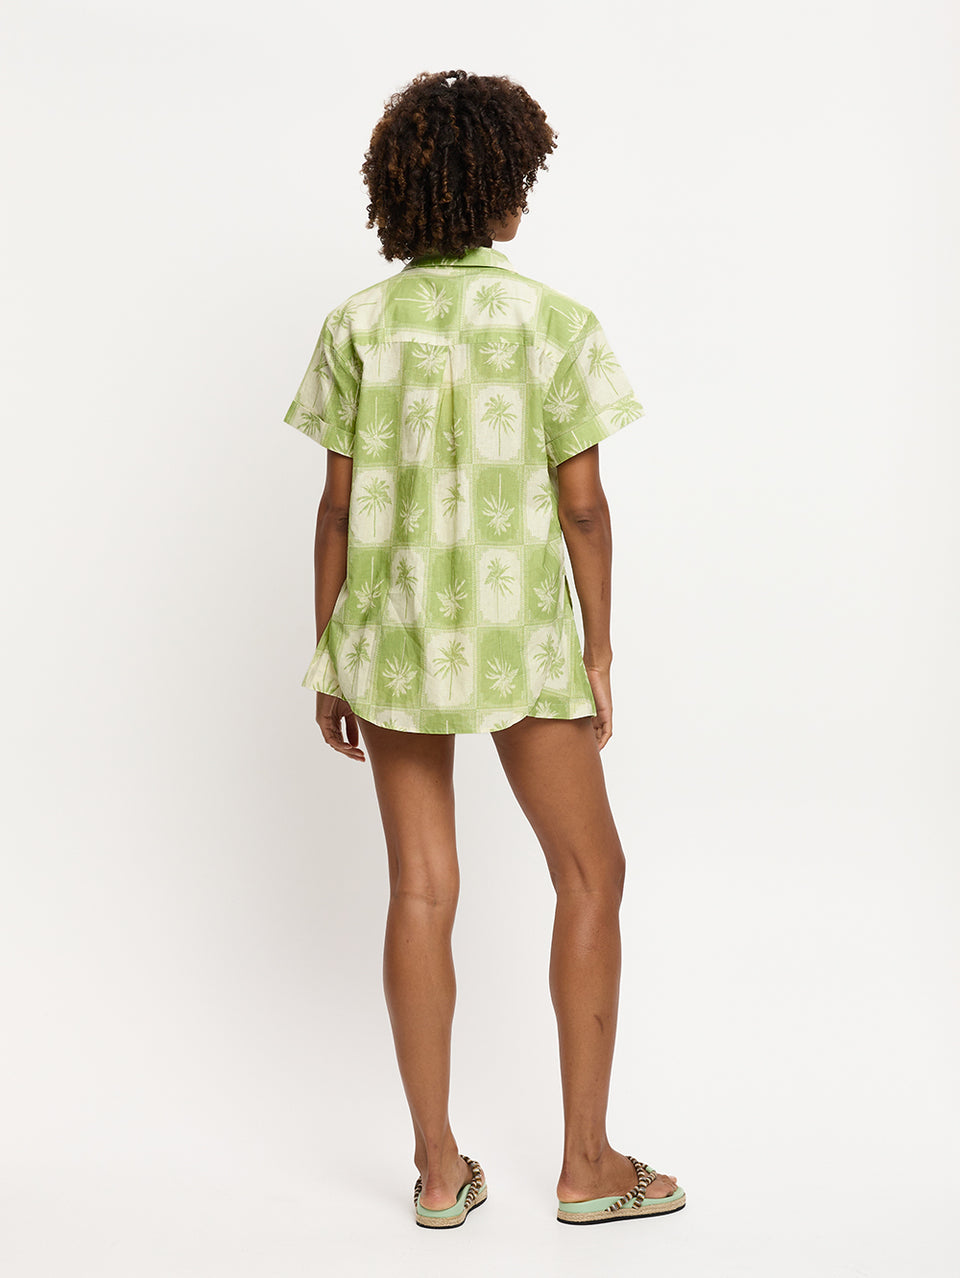 Paradiso Shirt KIVARI | Model wears palm tree printed shirt back view